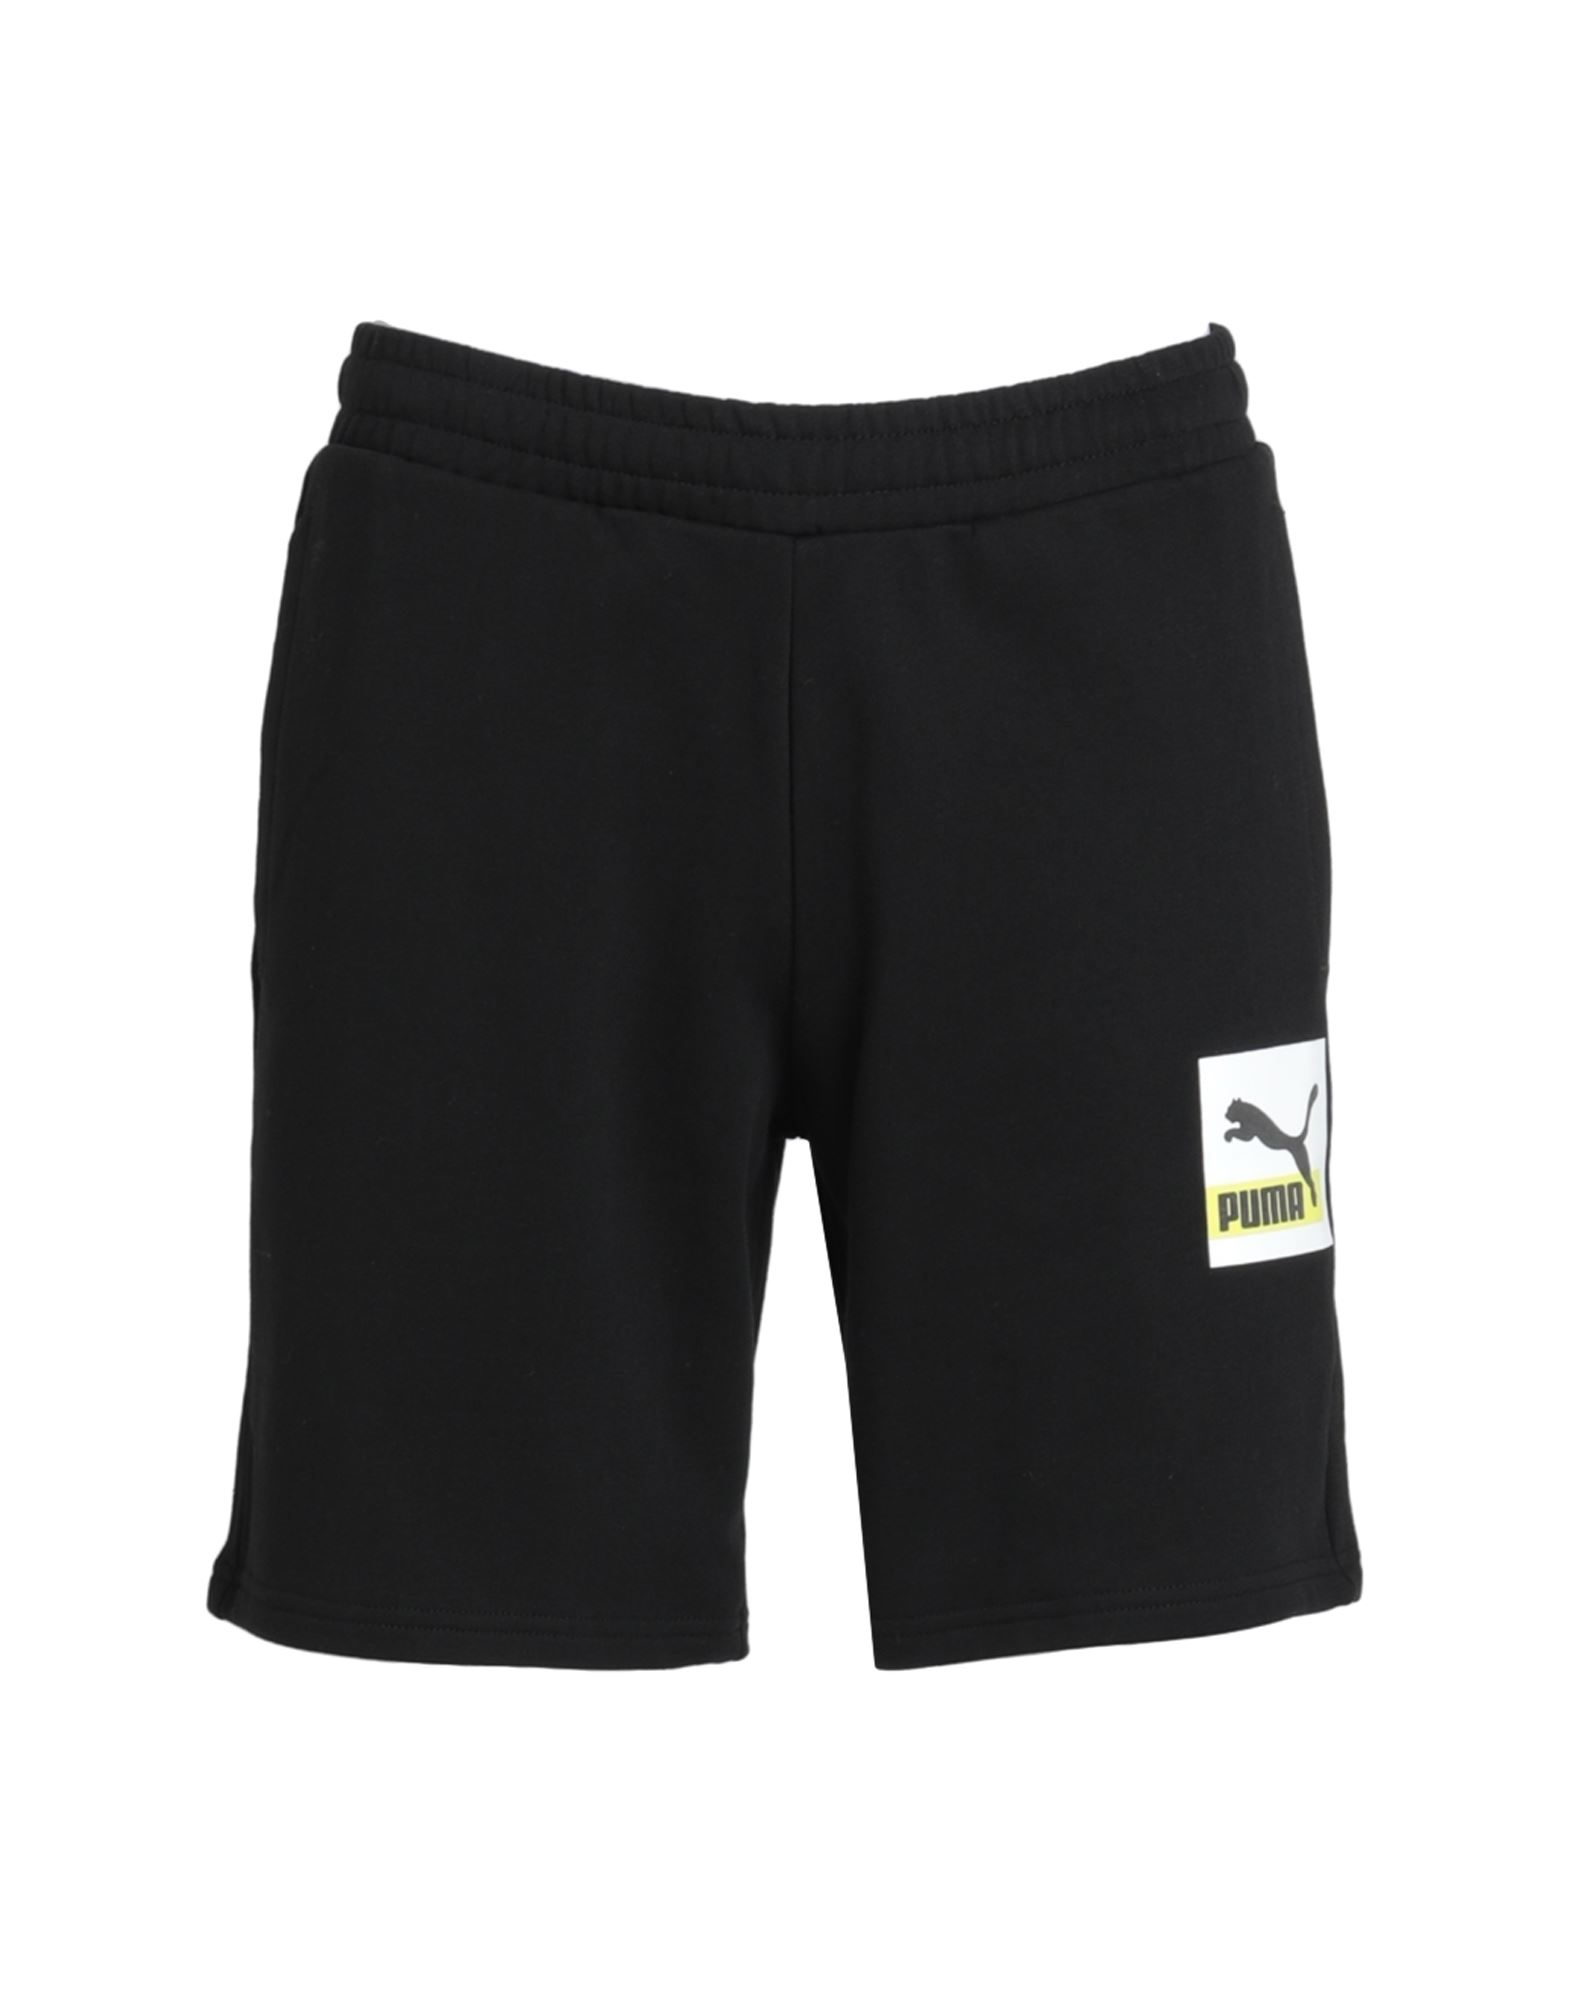 PUMA Shorts & Bermuda Shorts | Smart Closet